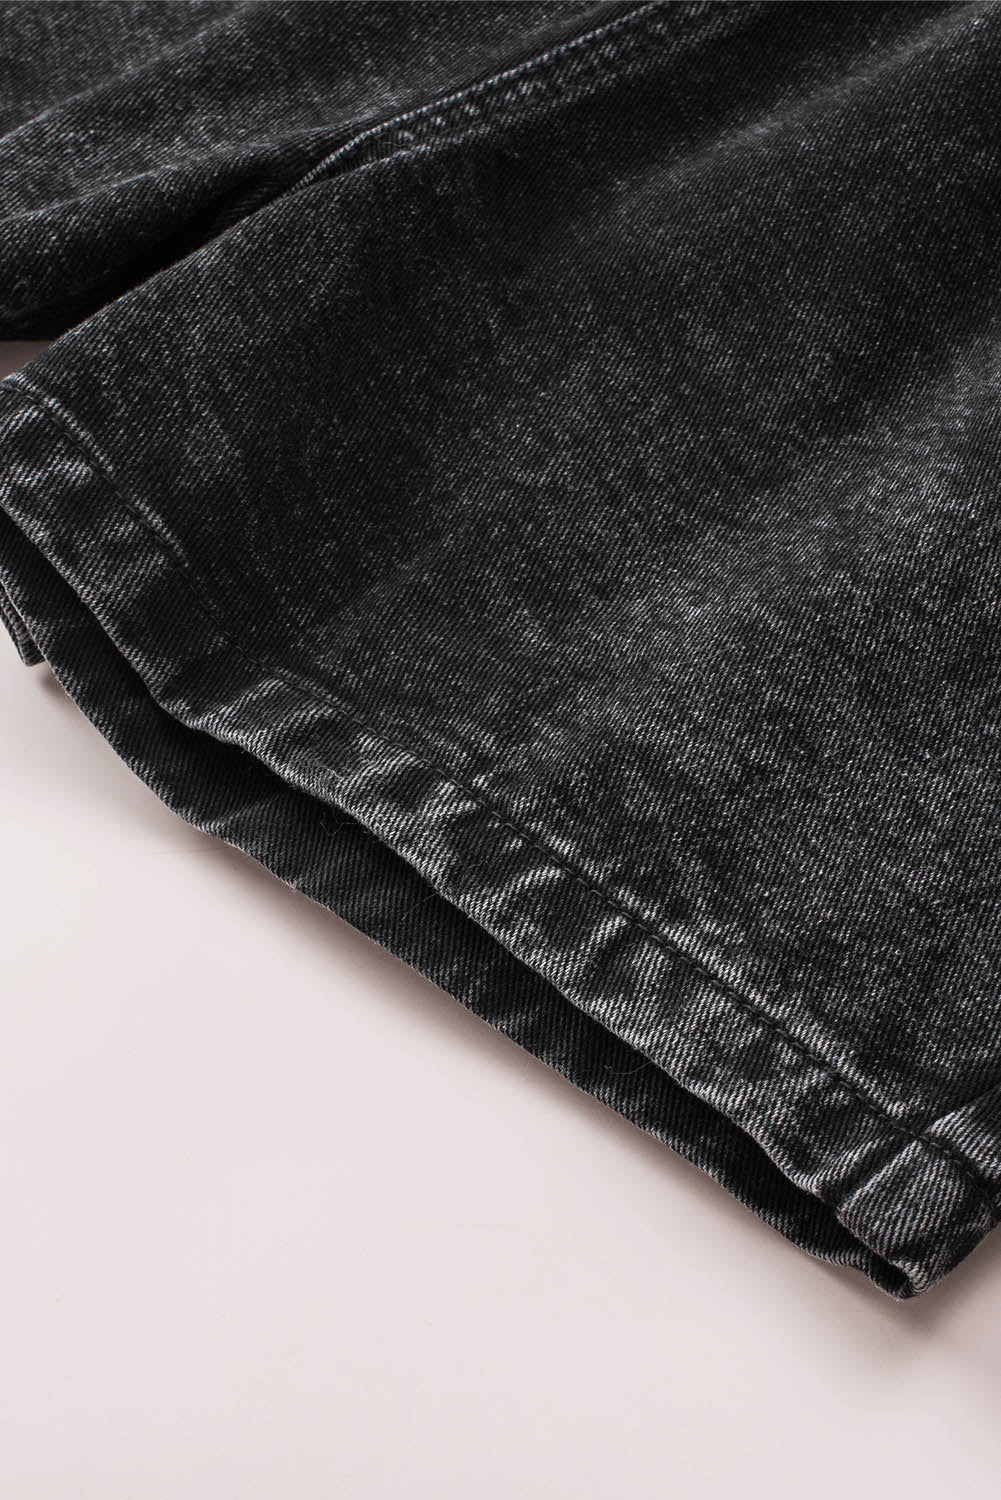 Black Retro Bleach-washed Ruffled Elastic High Waist Denim Shorts